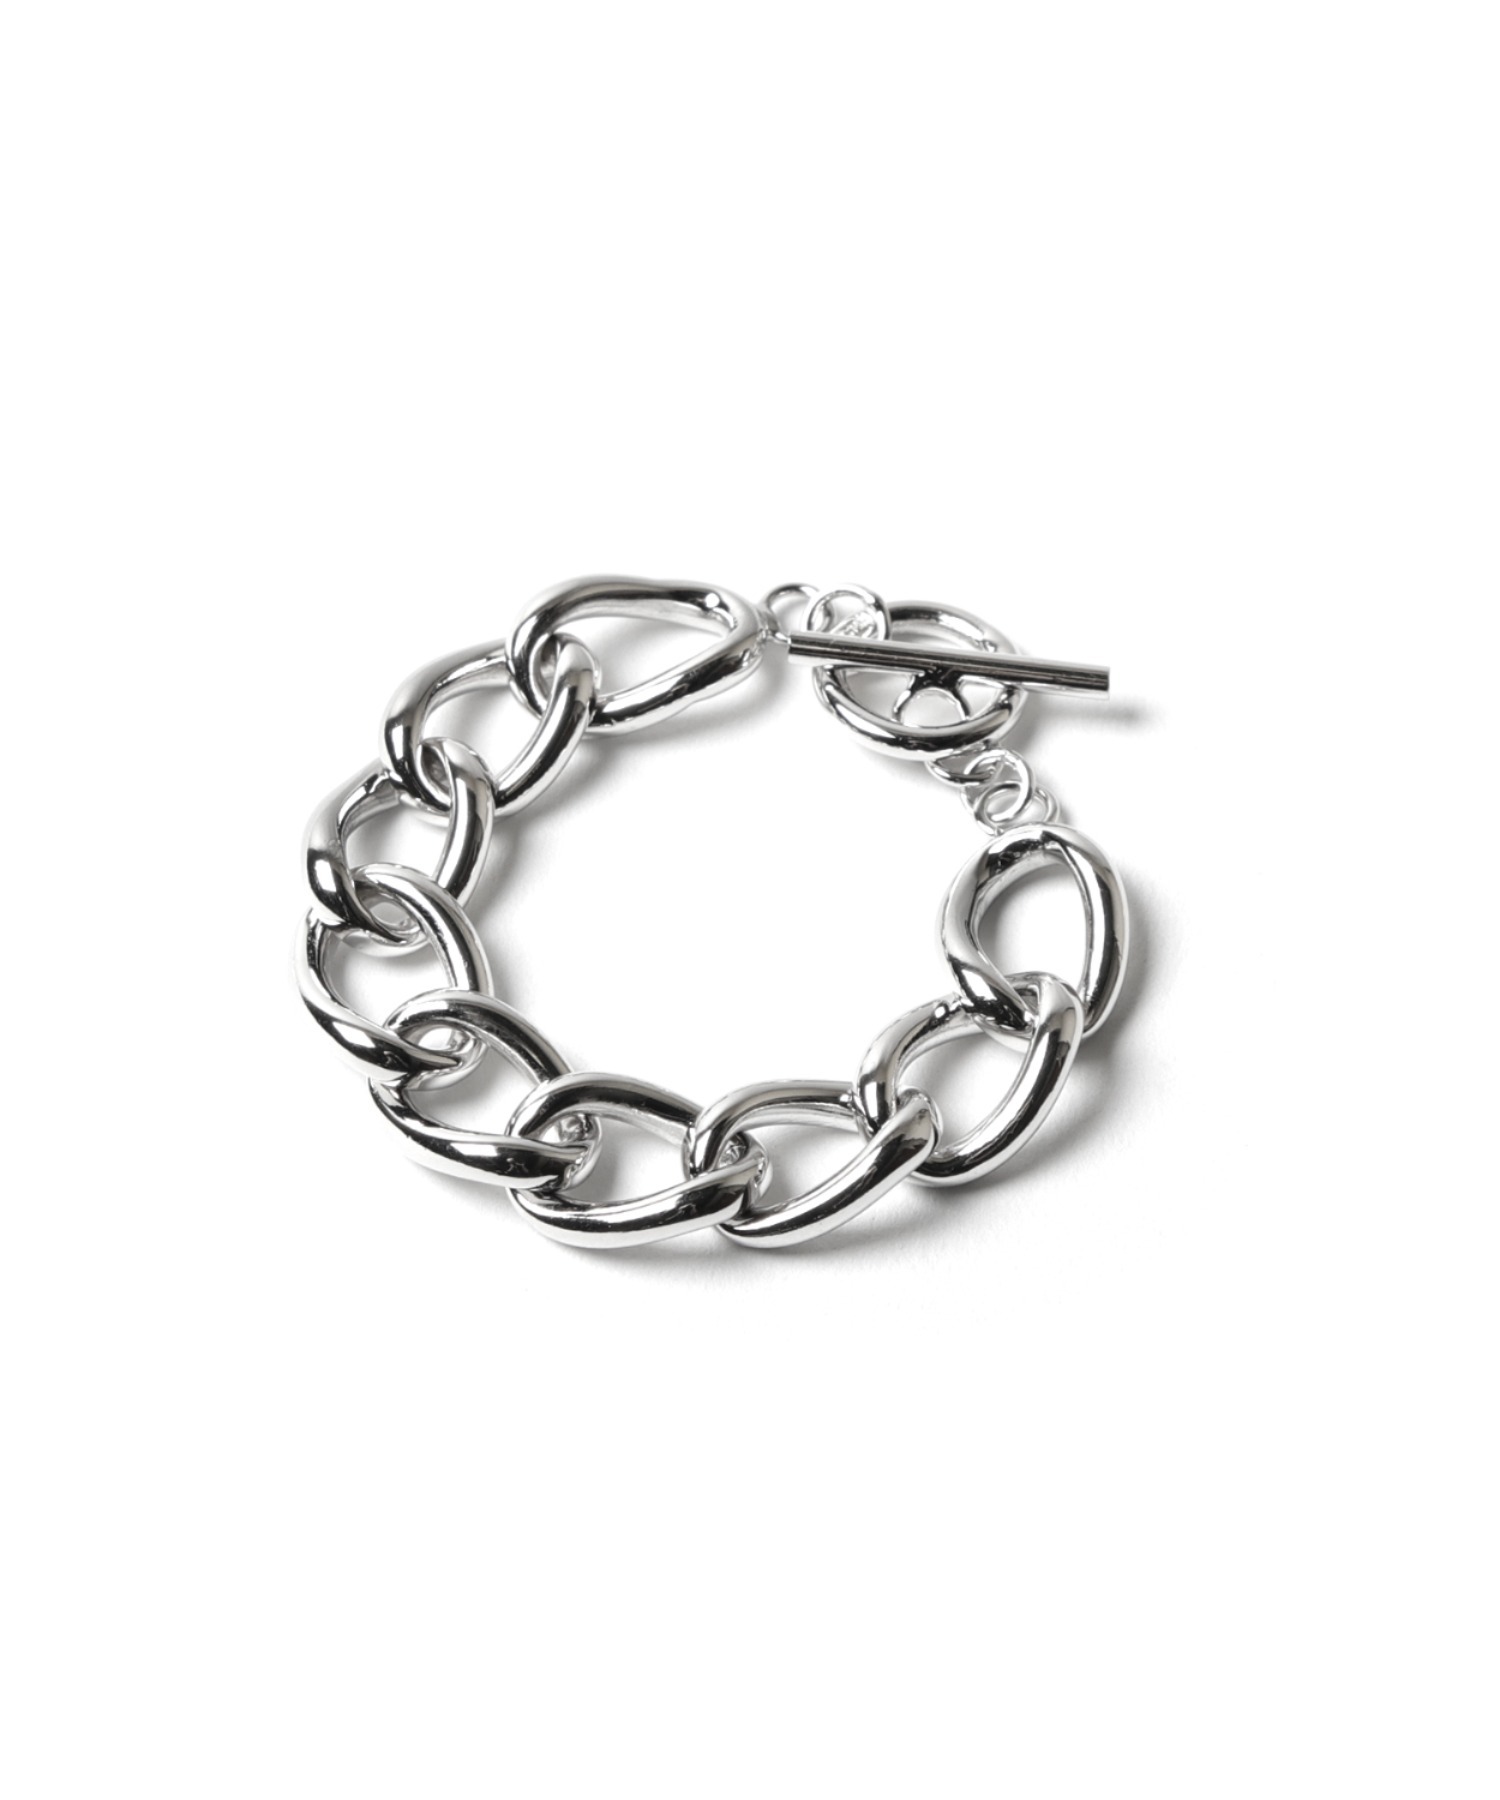 【YArKA/ヤーカ】silver925 thick chain bracelet [TDB1]/太チェーンブレスレット シルバー925